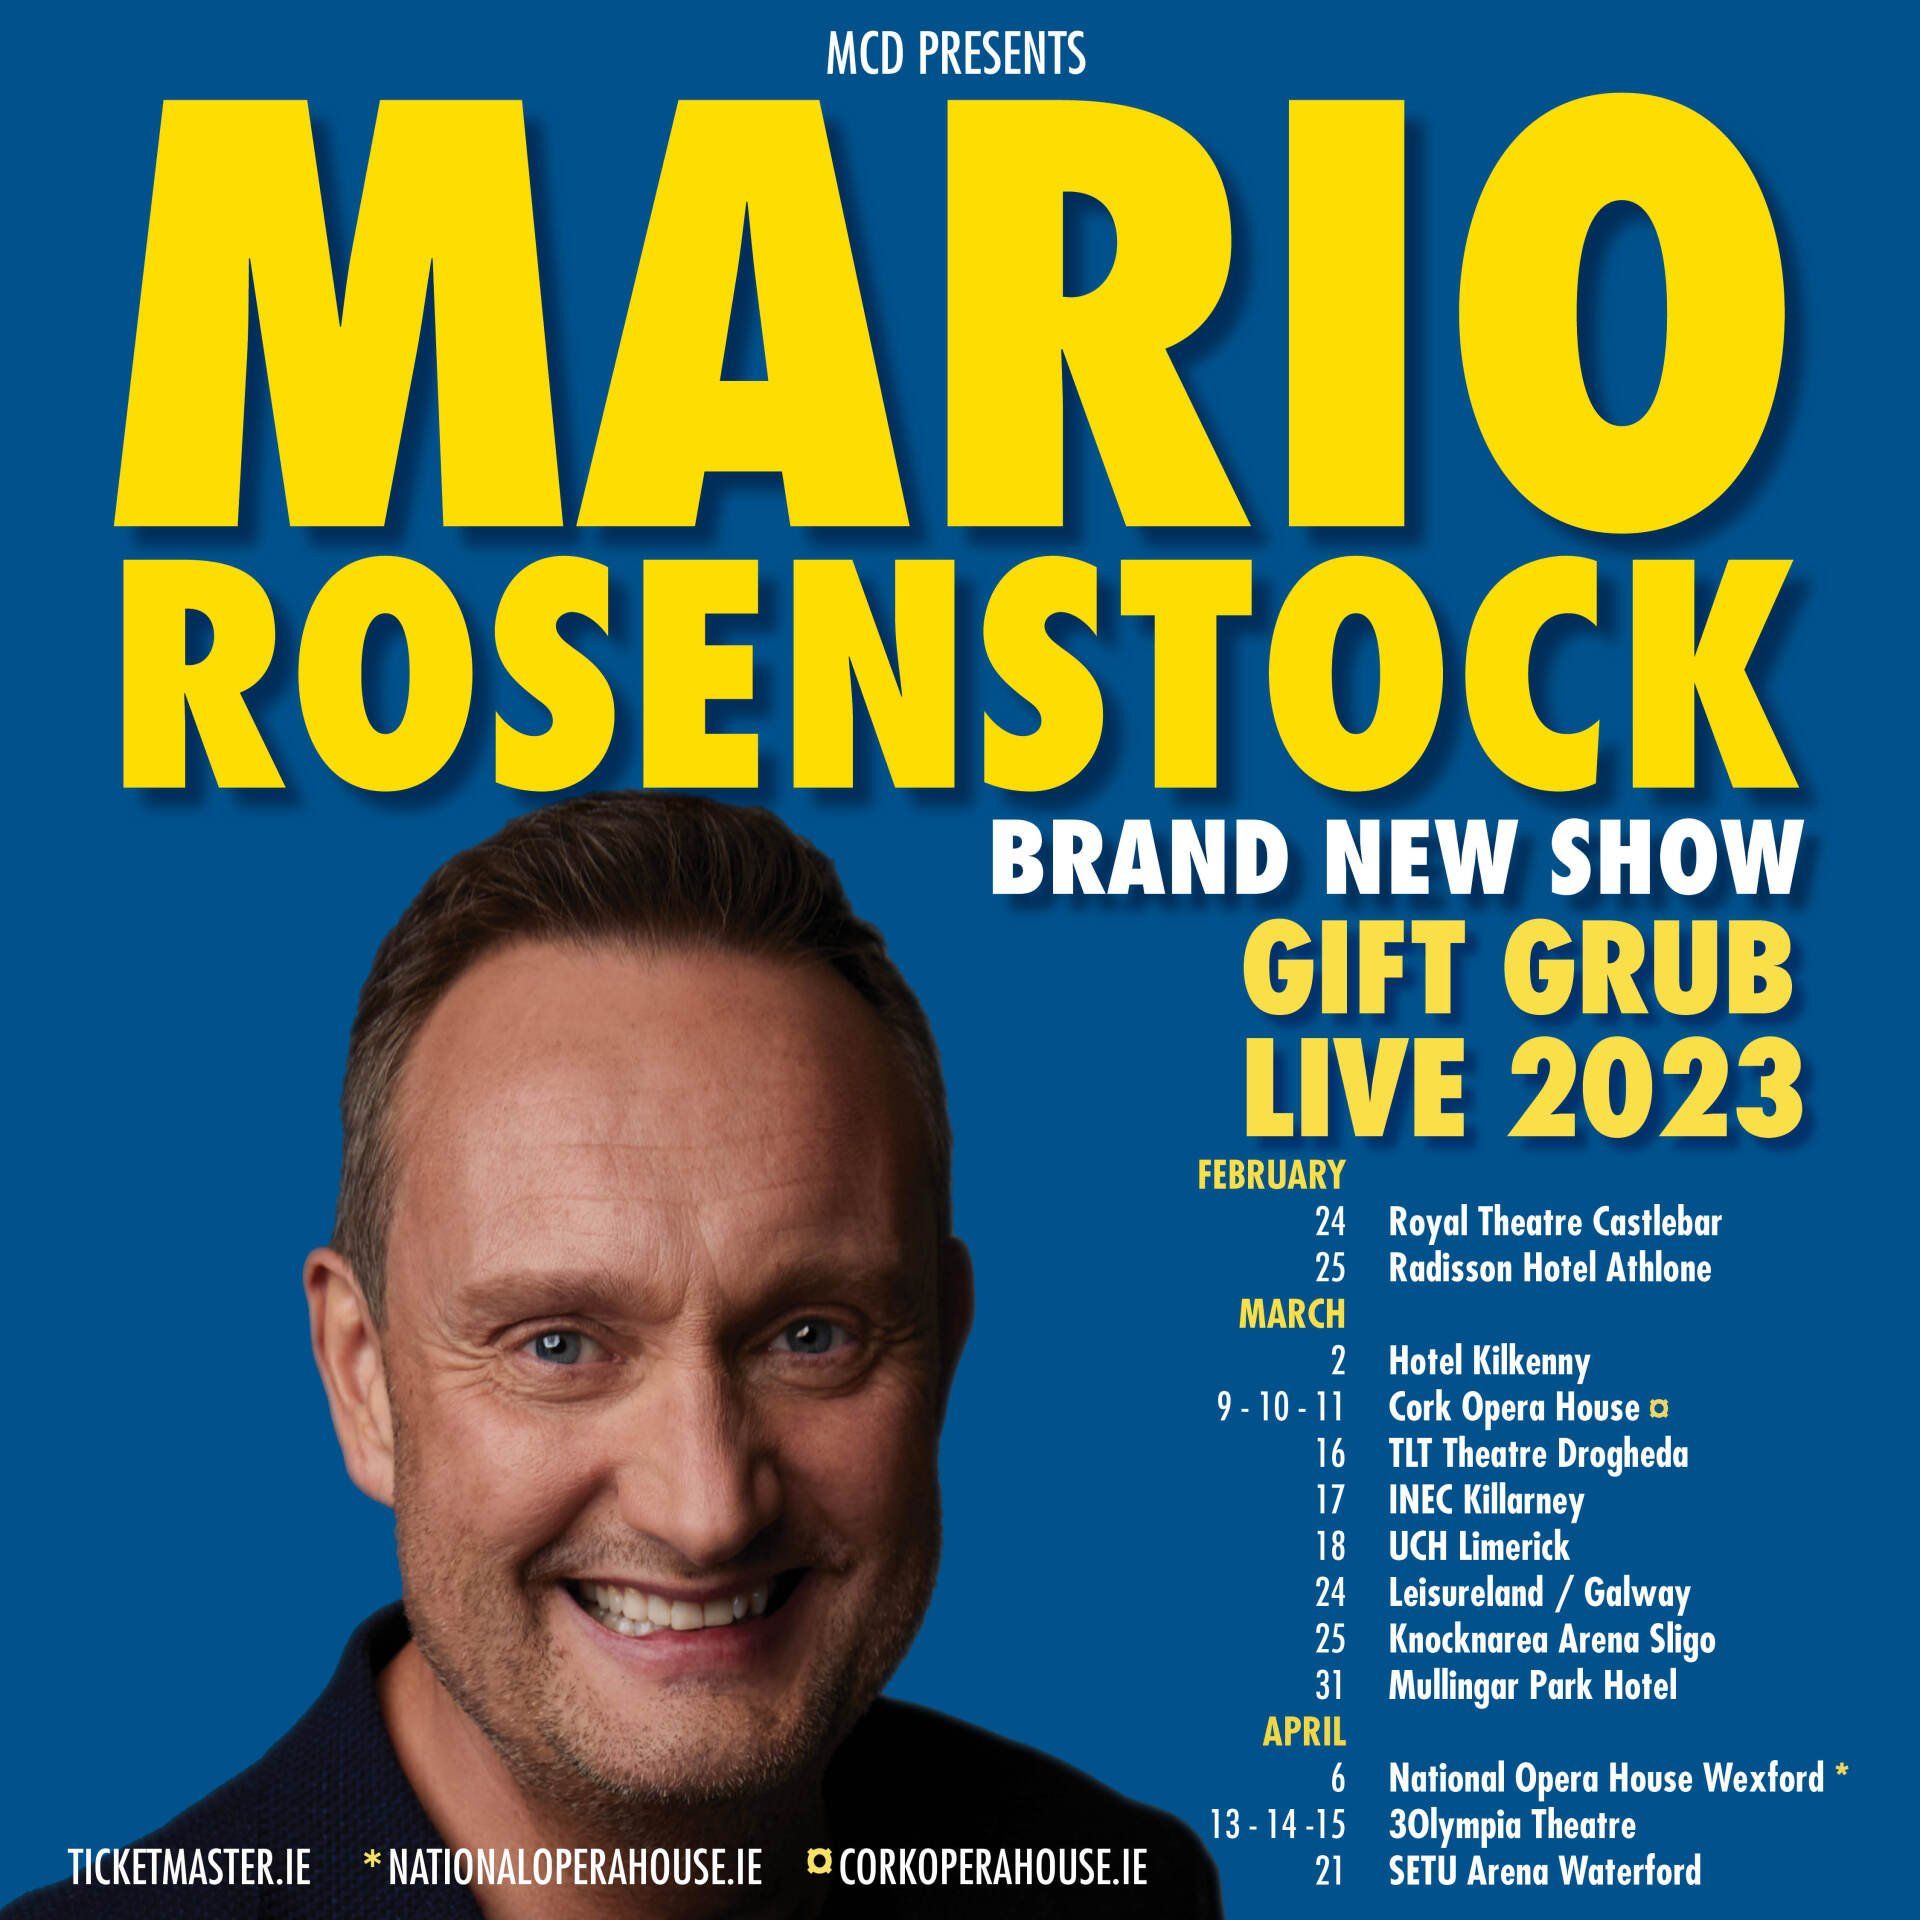 Gift Grub Live 2023  starring  Mario Rosenstock   NATIONWIDE TOUR 2023